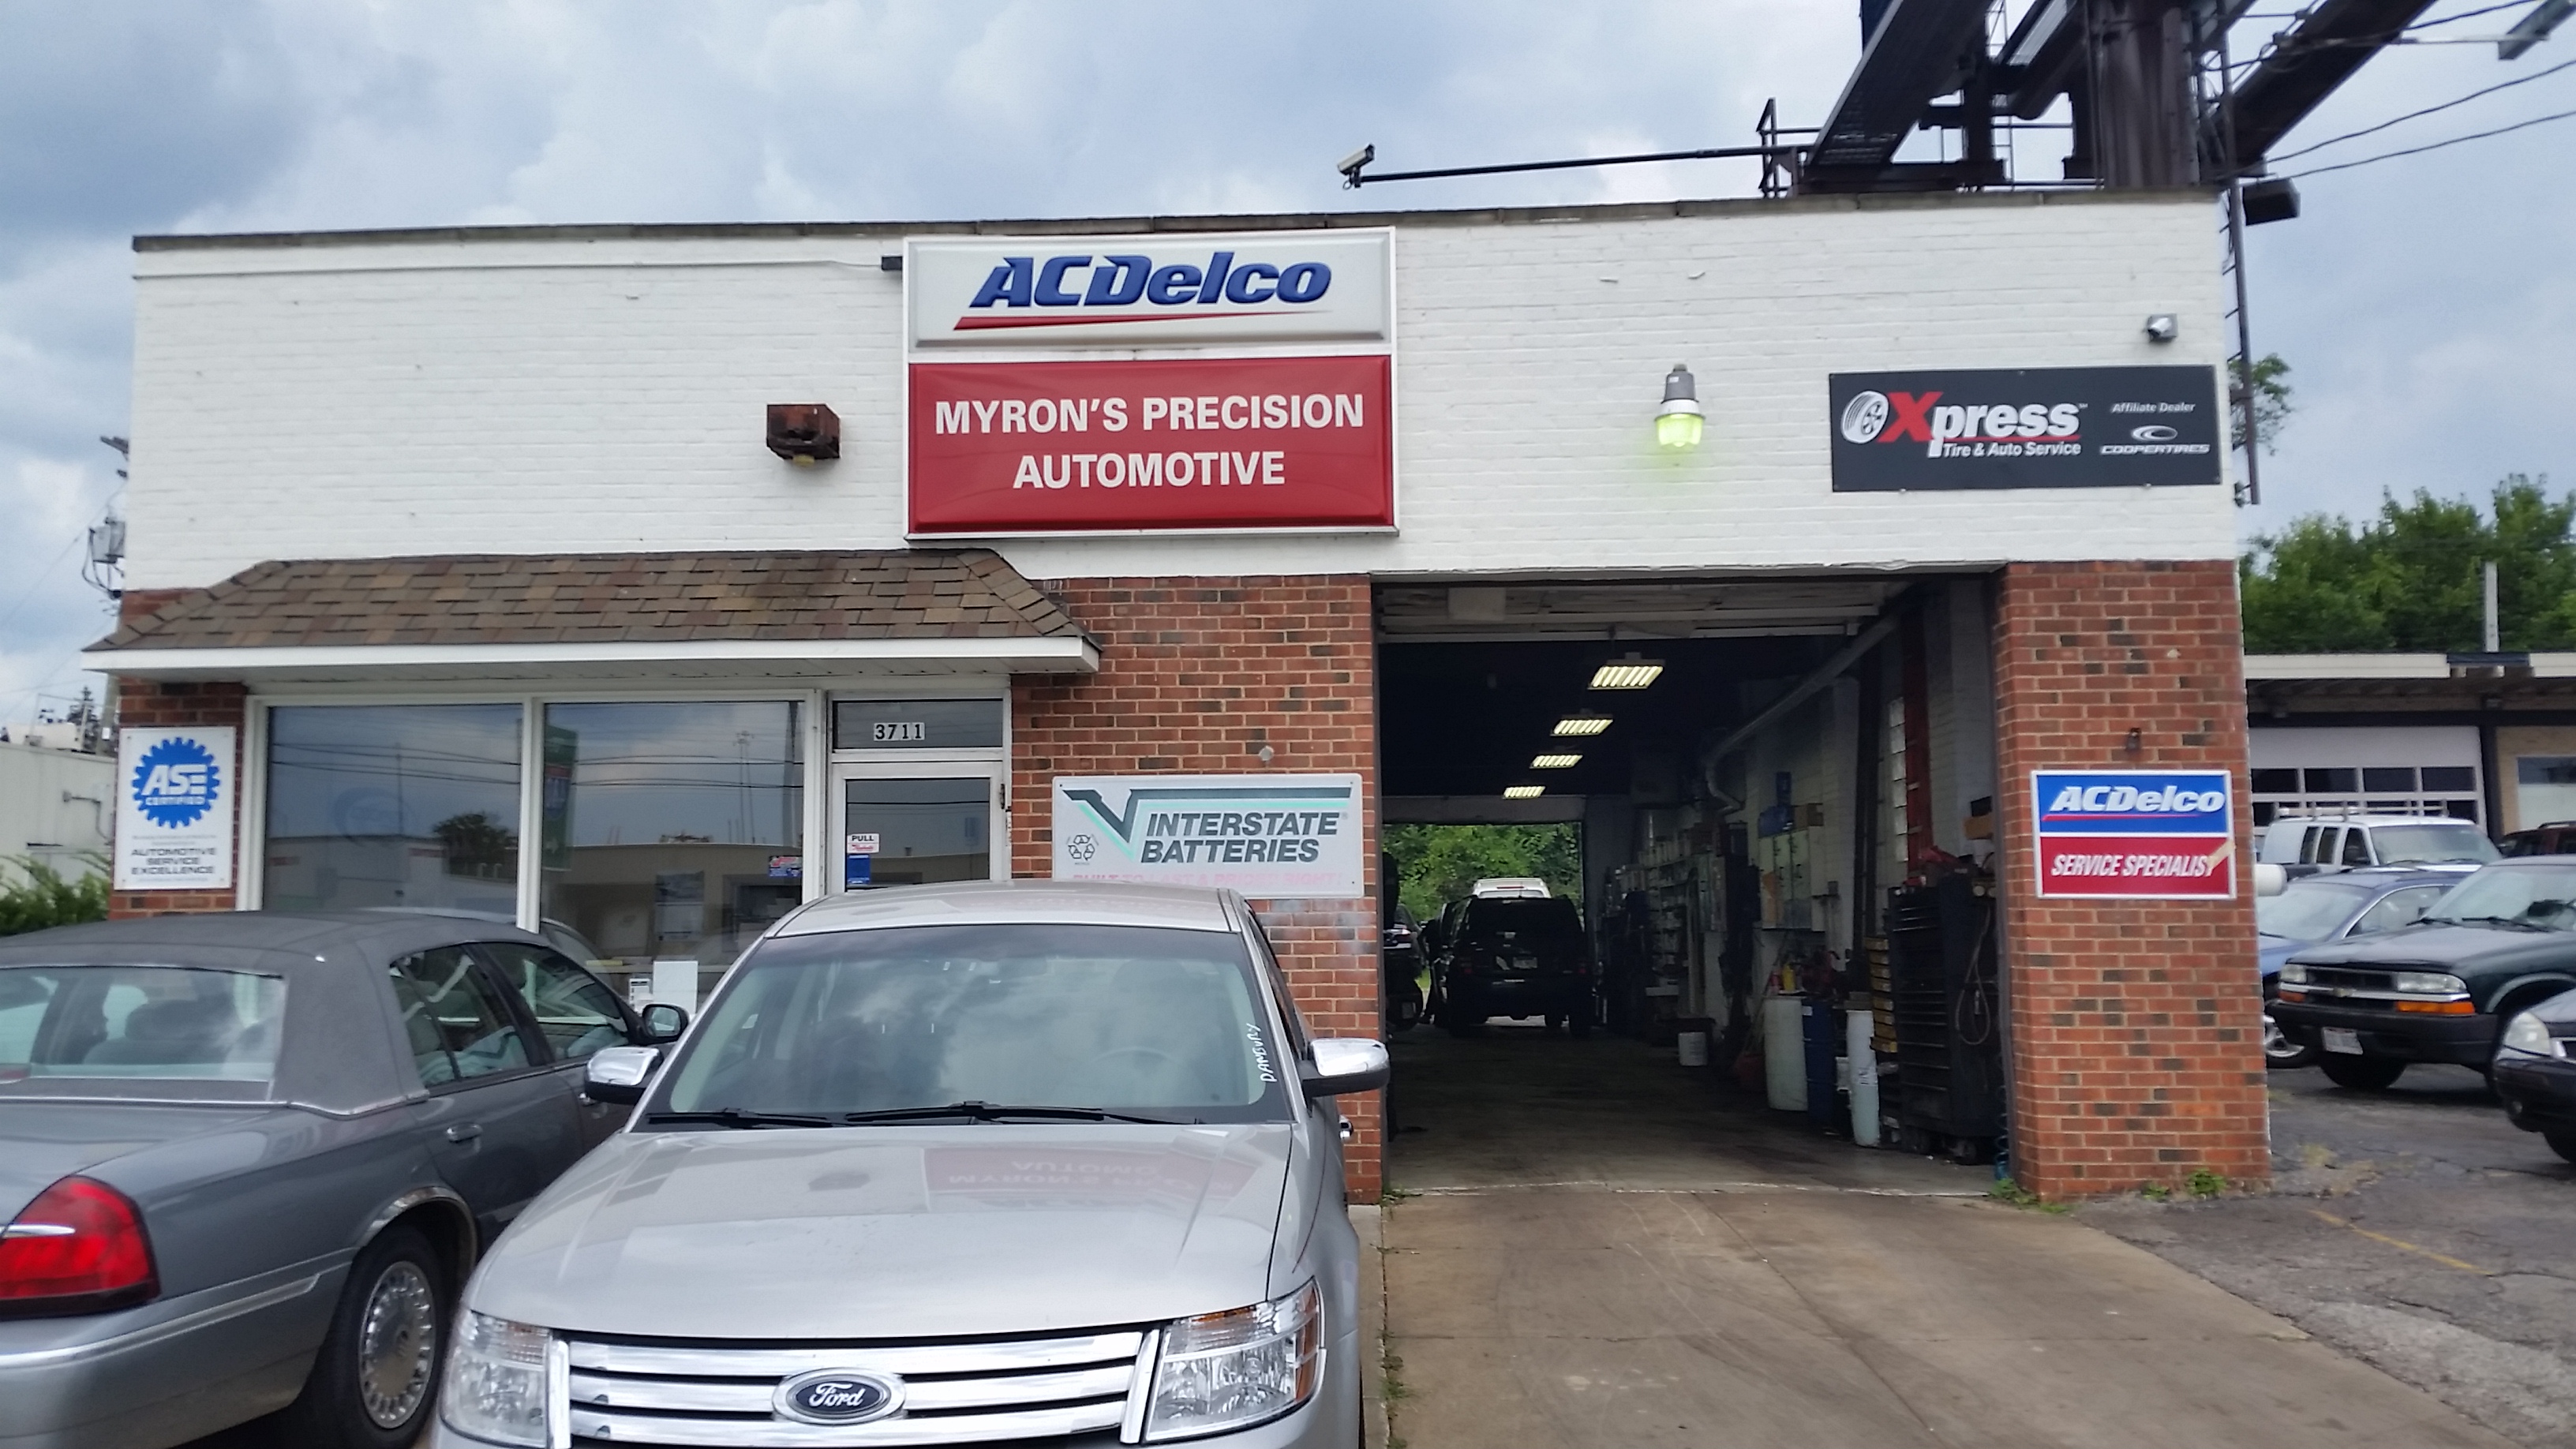 Auto Repair Xpress Tire Auto Services Centers in Northwest Ohio and